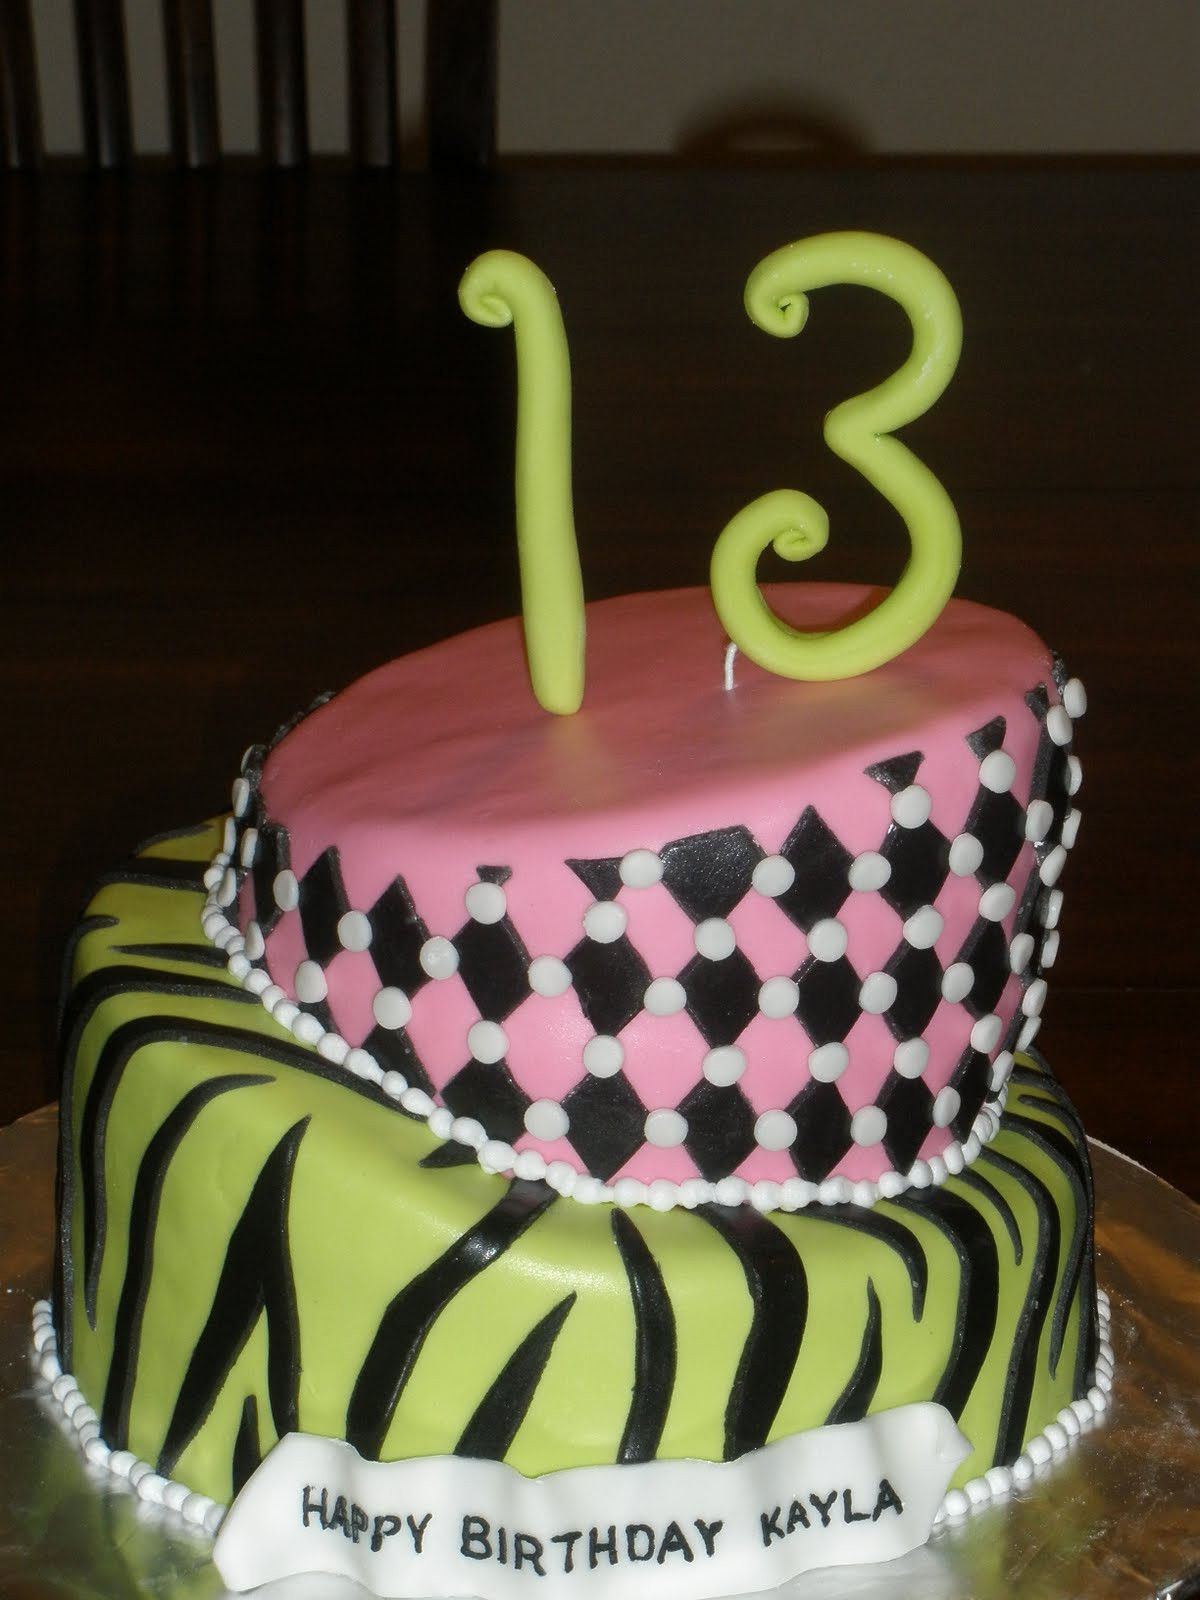 13 Birthday Cakes
 It s a piece of cake 13th birthday cake